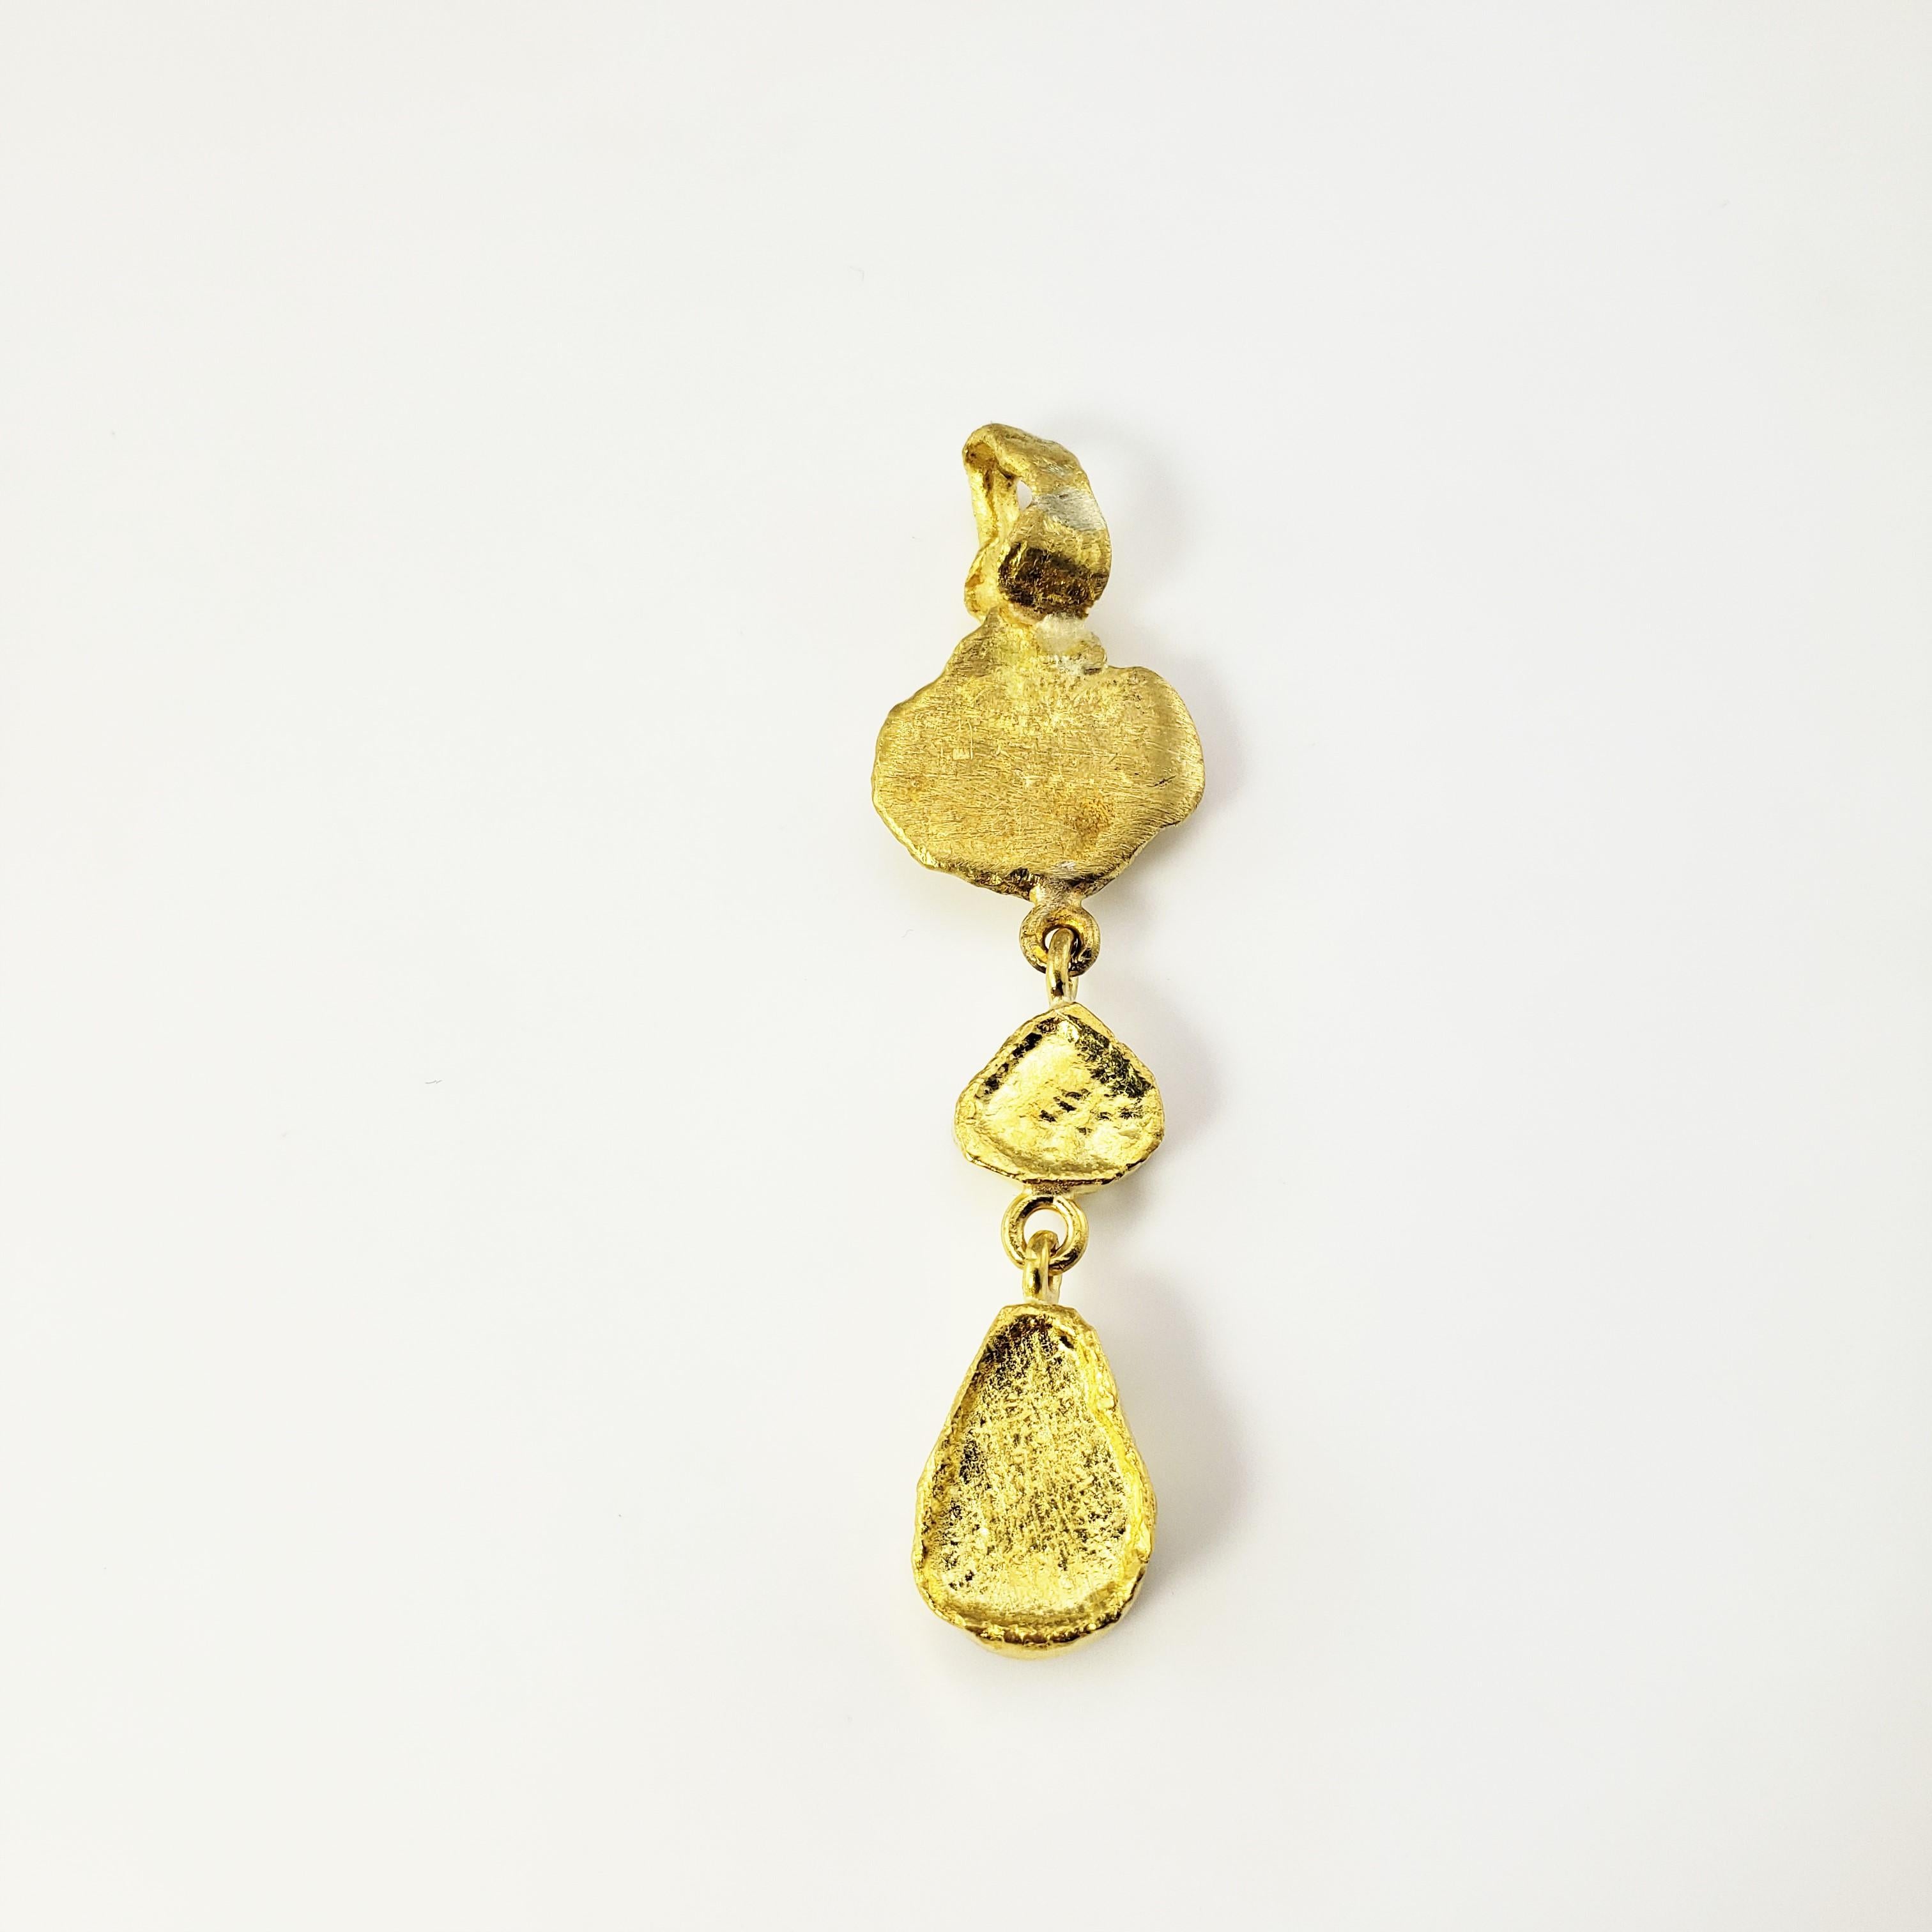 Handmade 21 Karat Yellow Gold and Glass Pendant For Sale 1